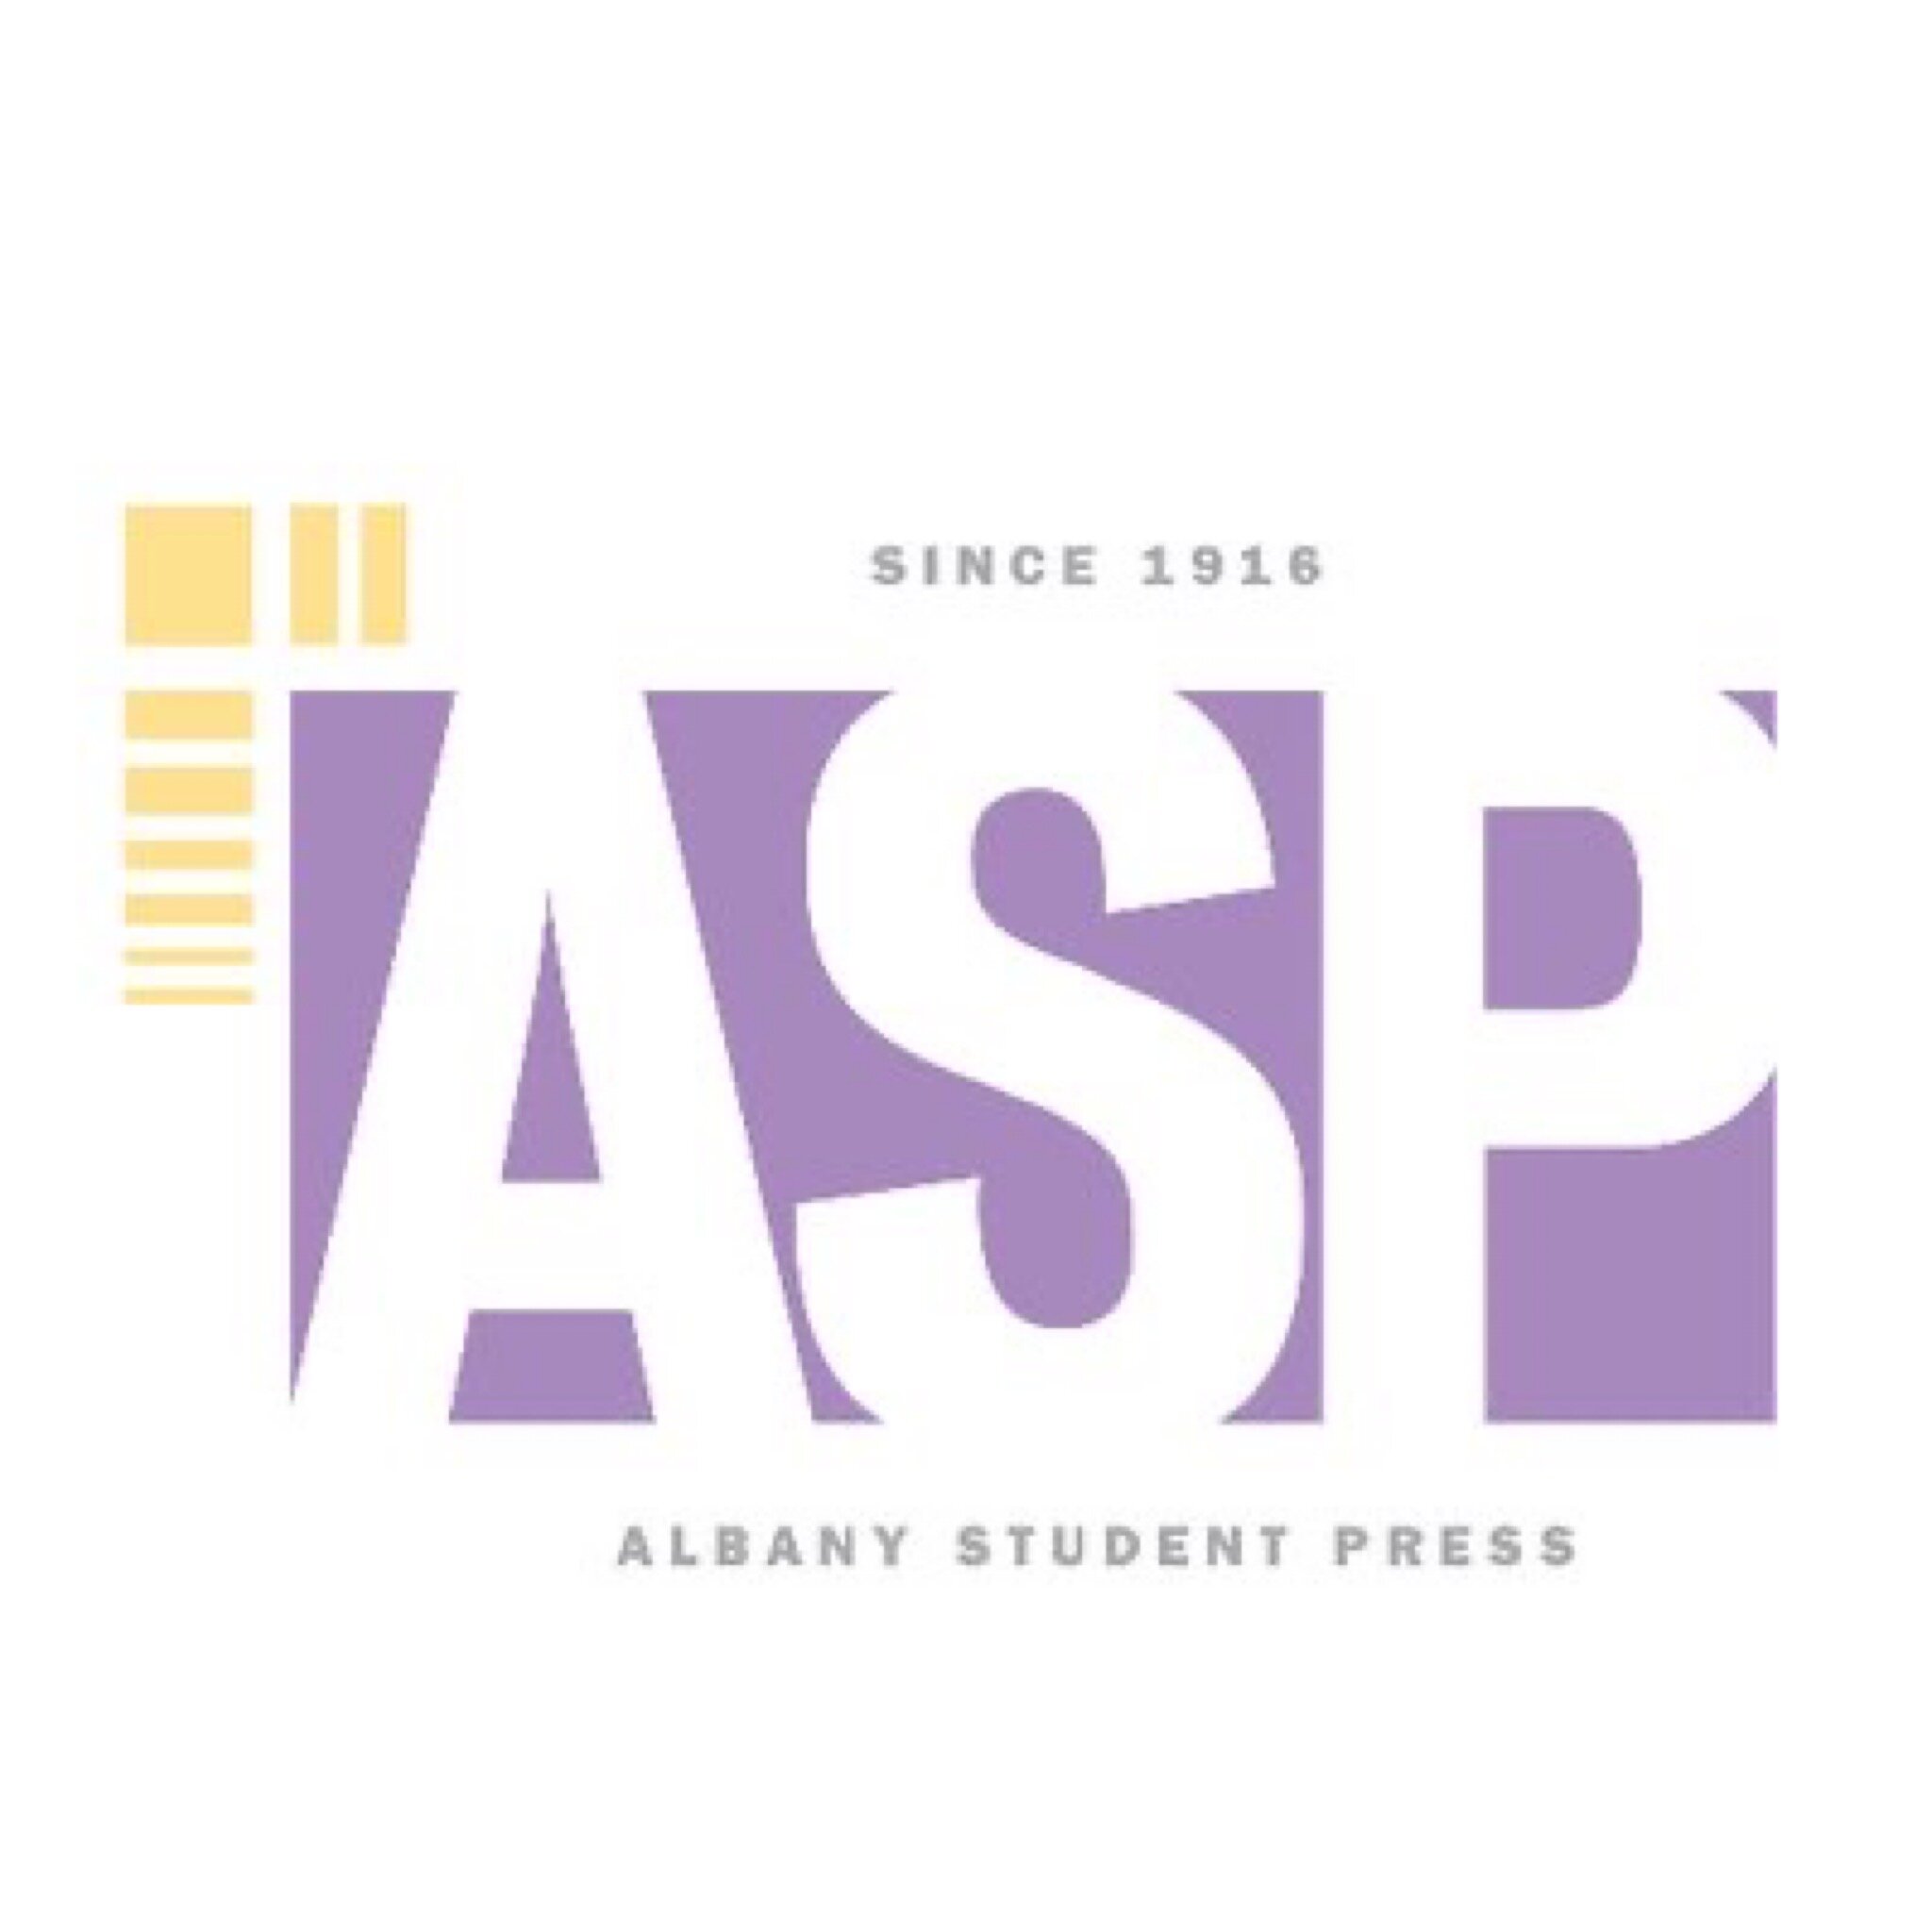 albany student press.JPG